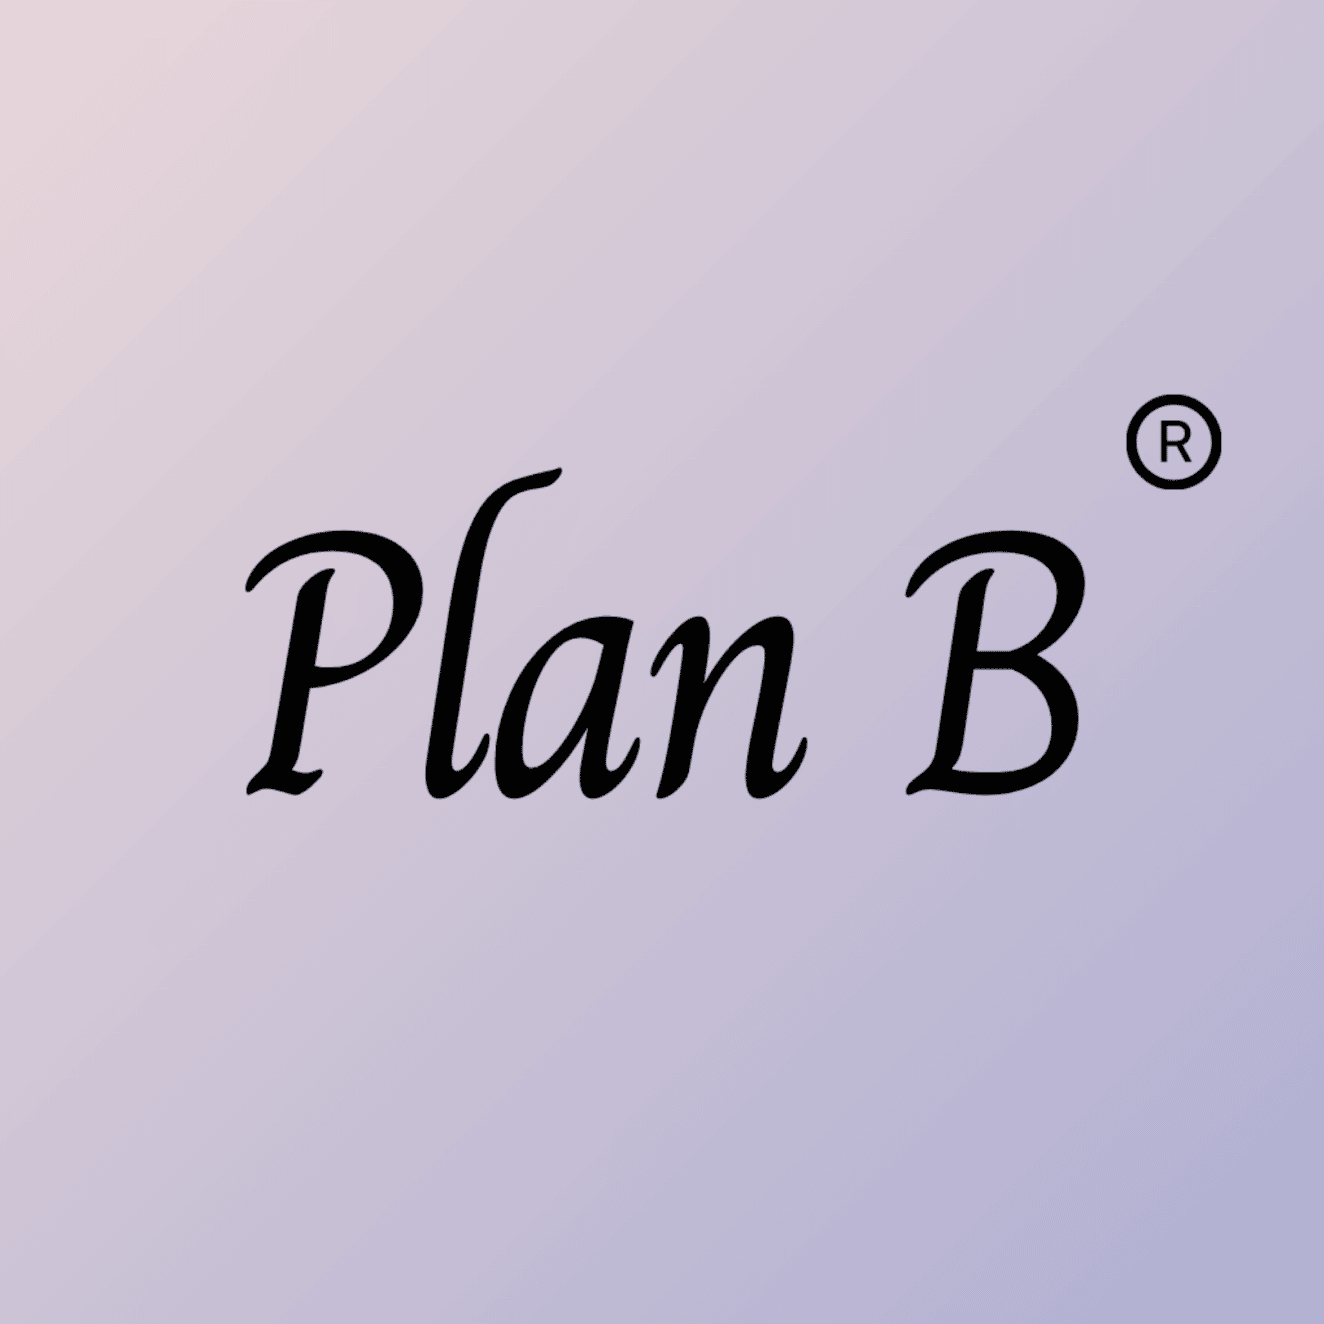 Buy Plan B, Morning After Pill